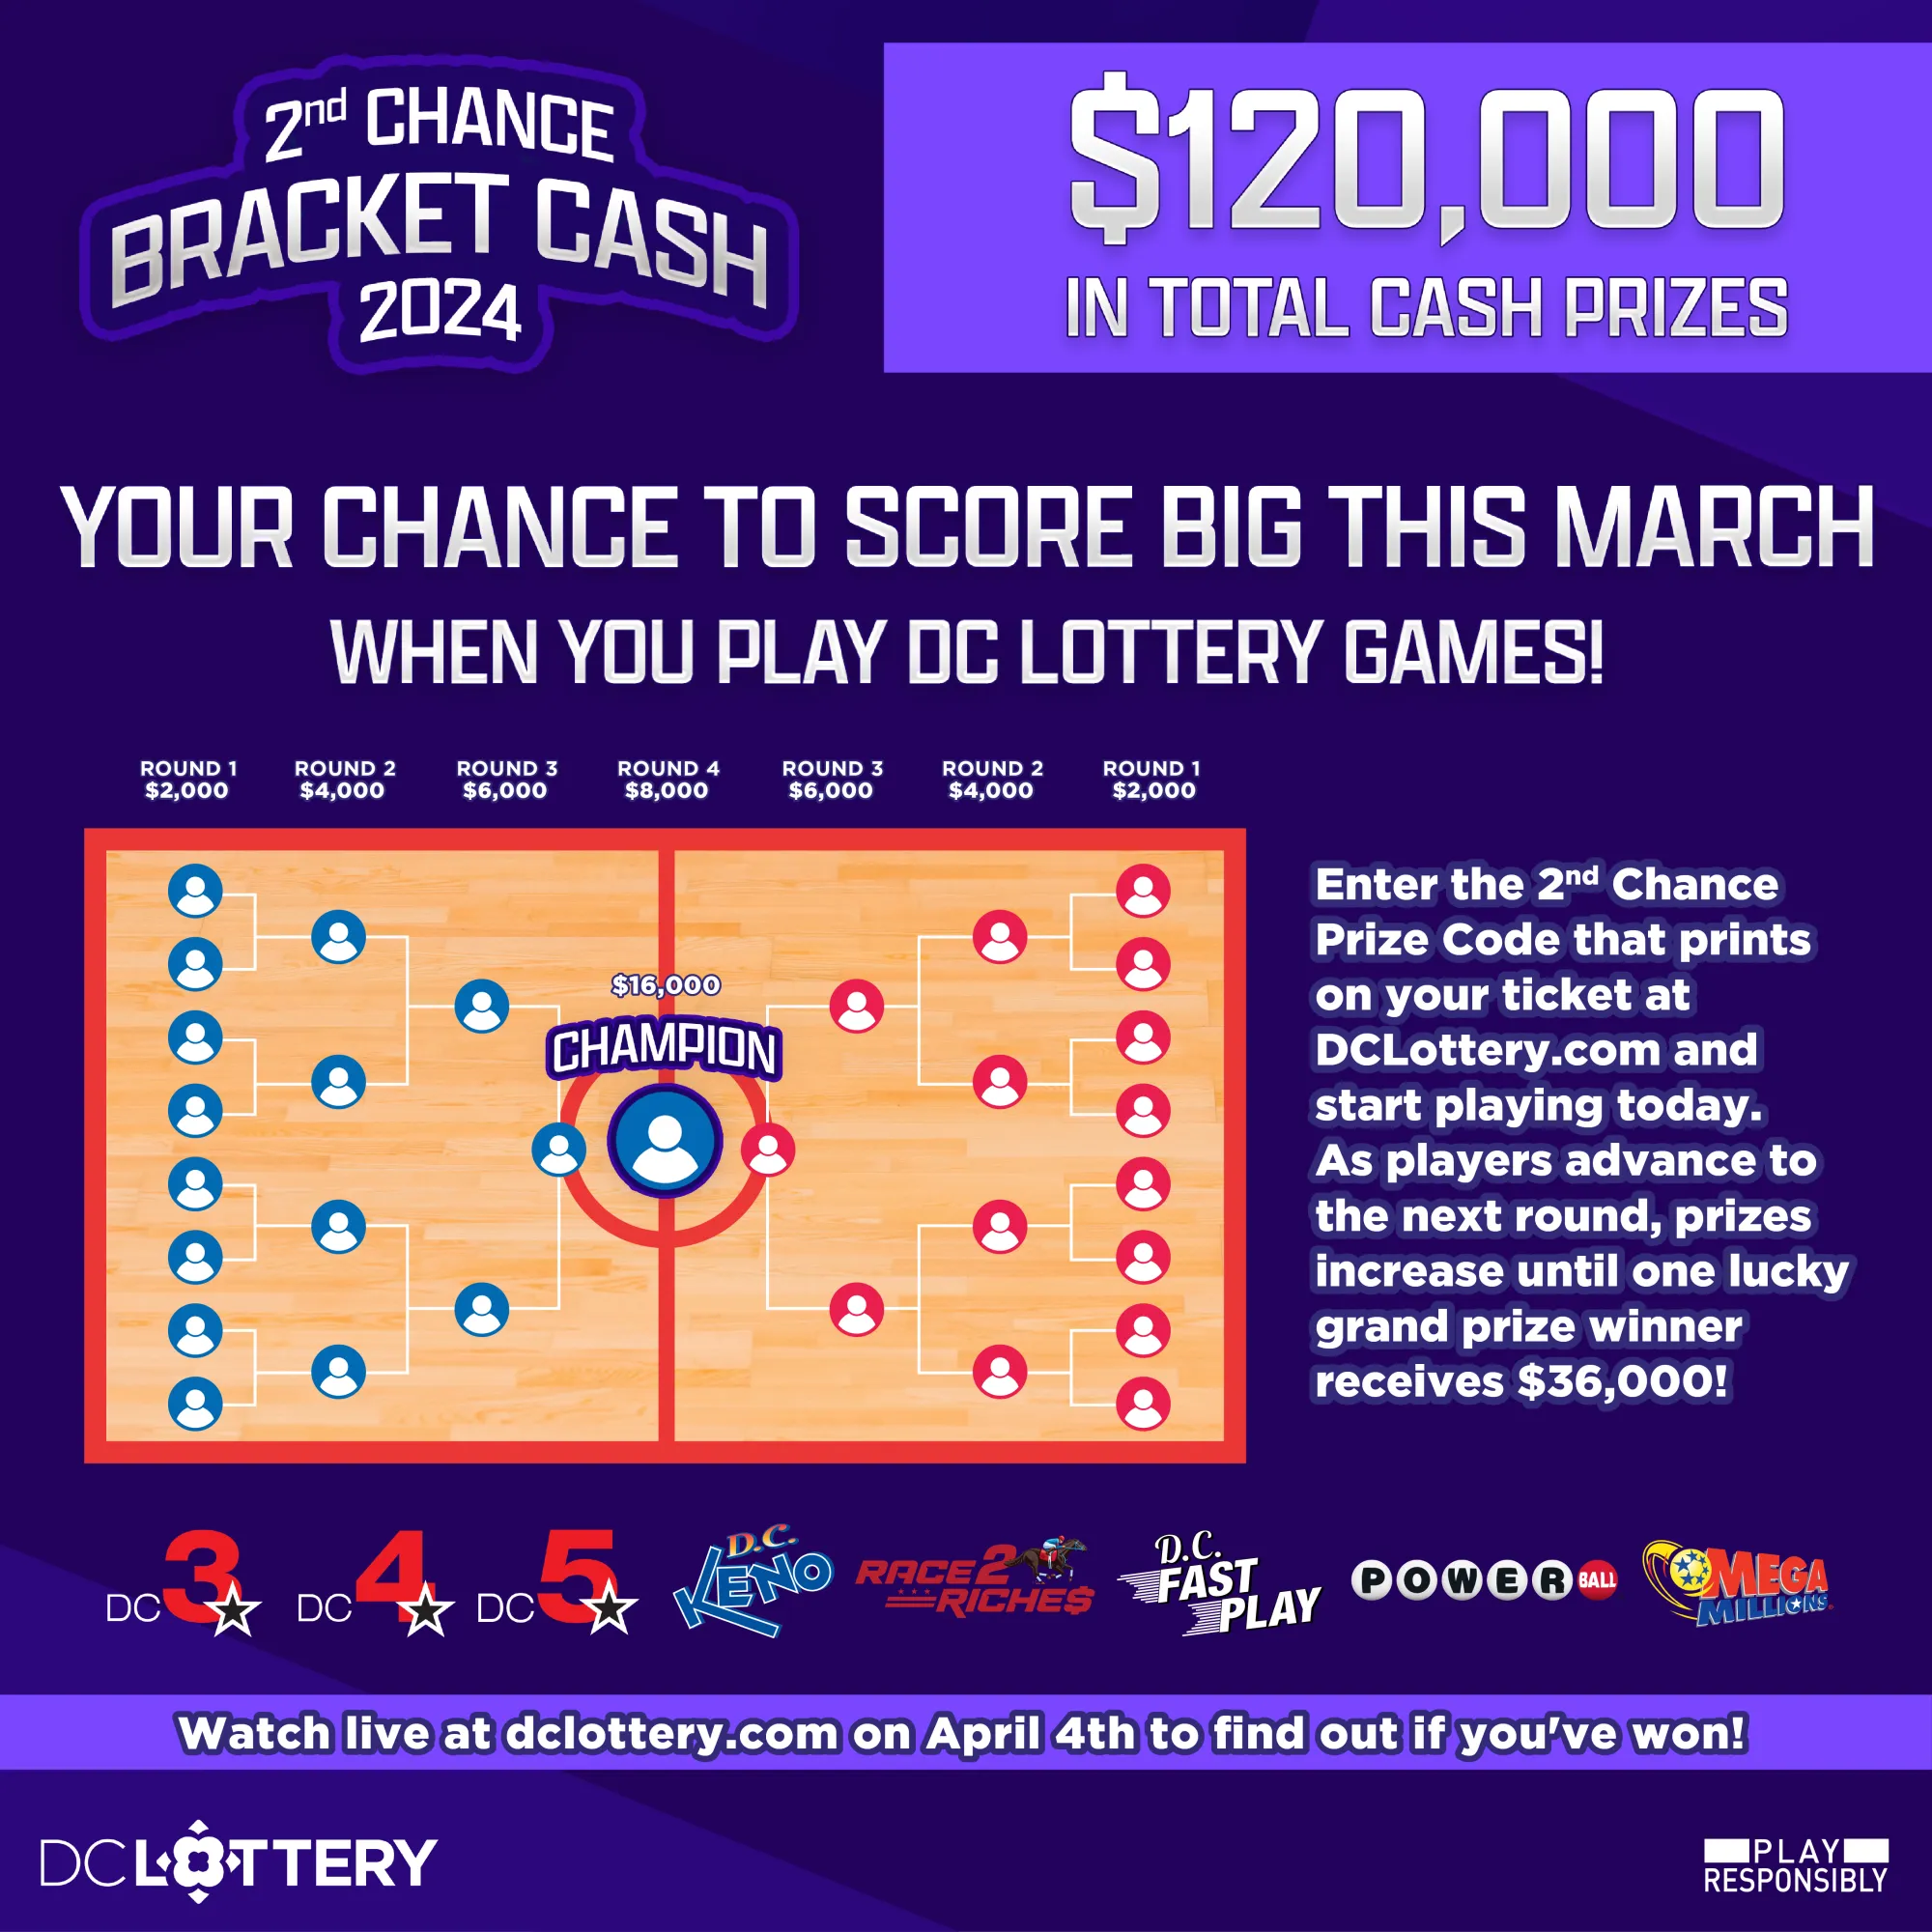 Bracket Cash 2nd Chance Contest 2024